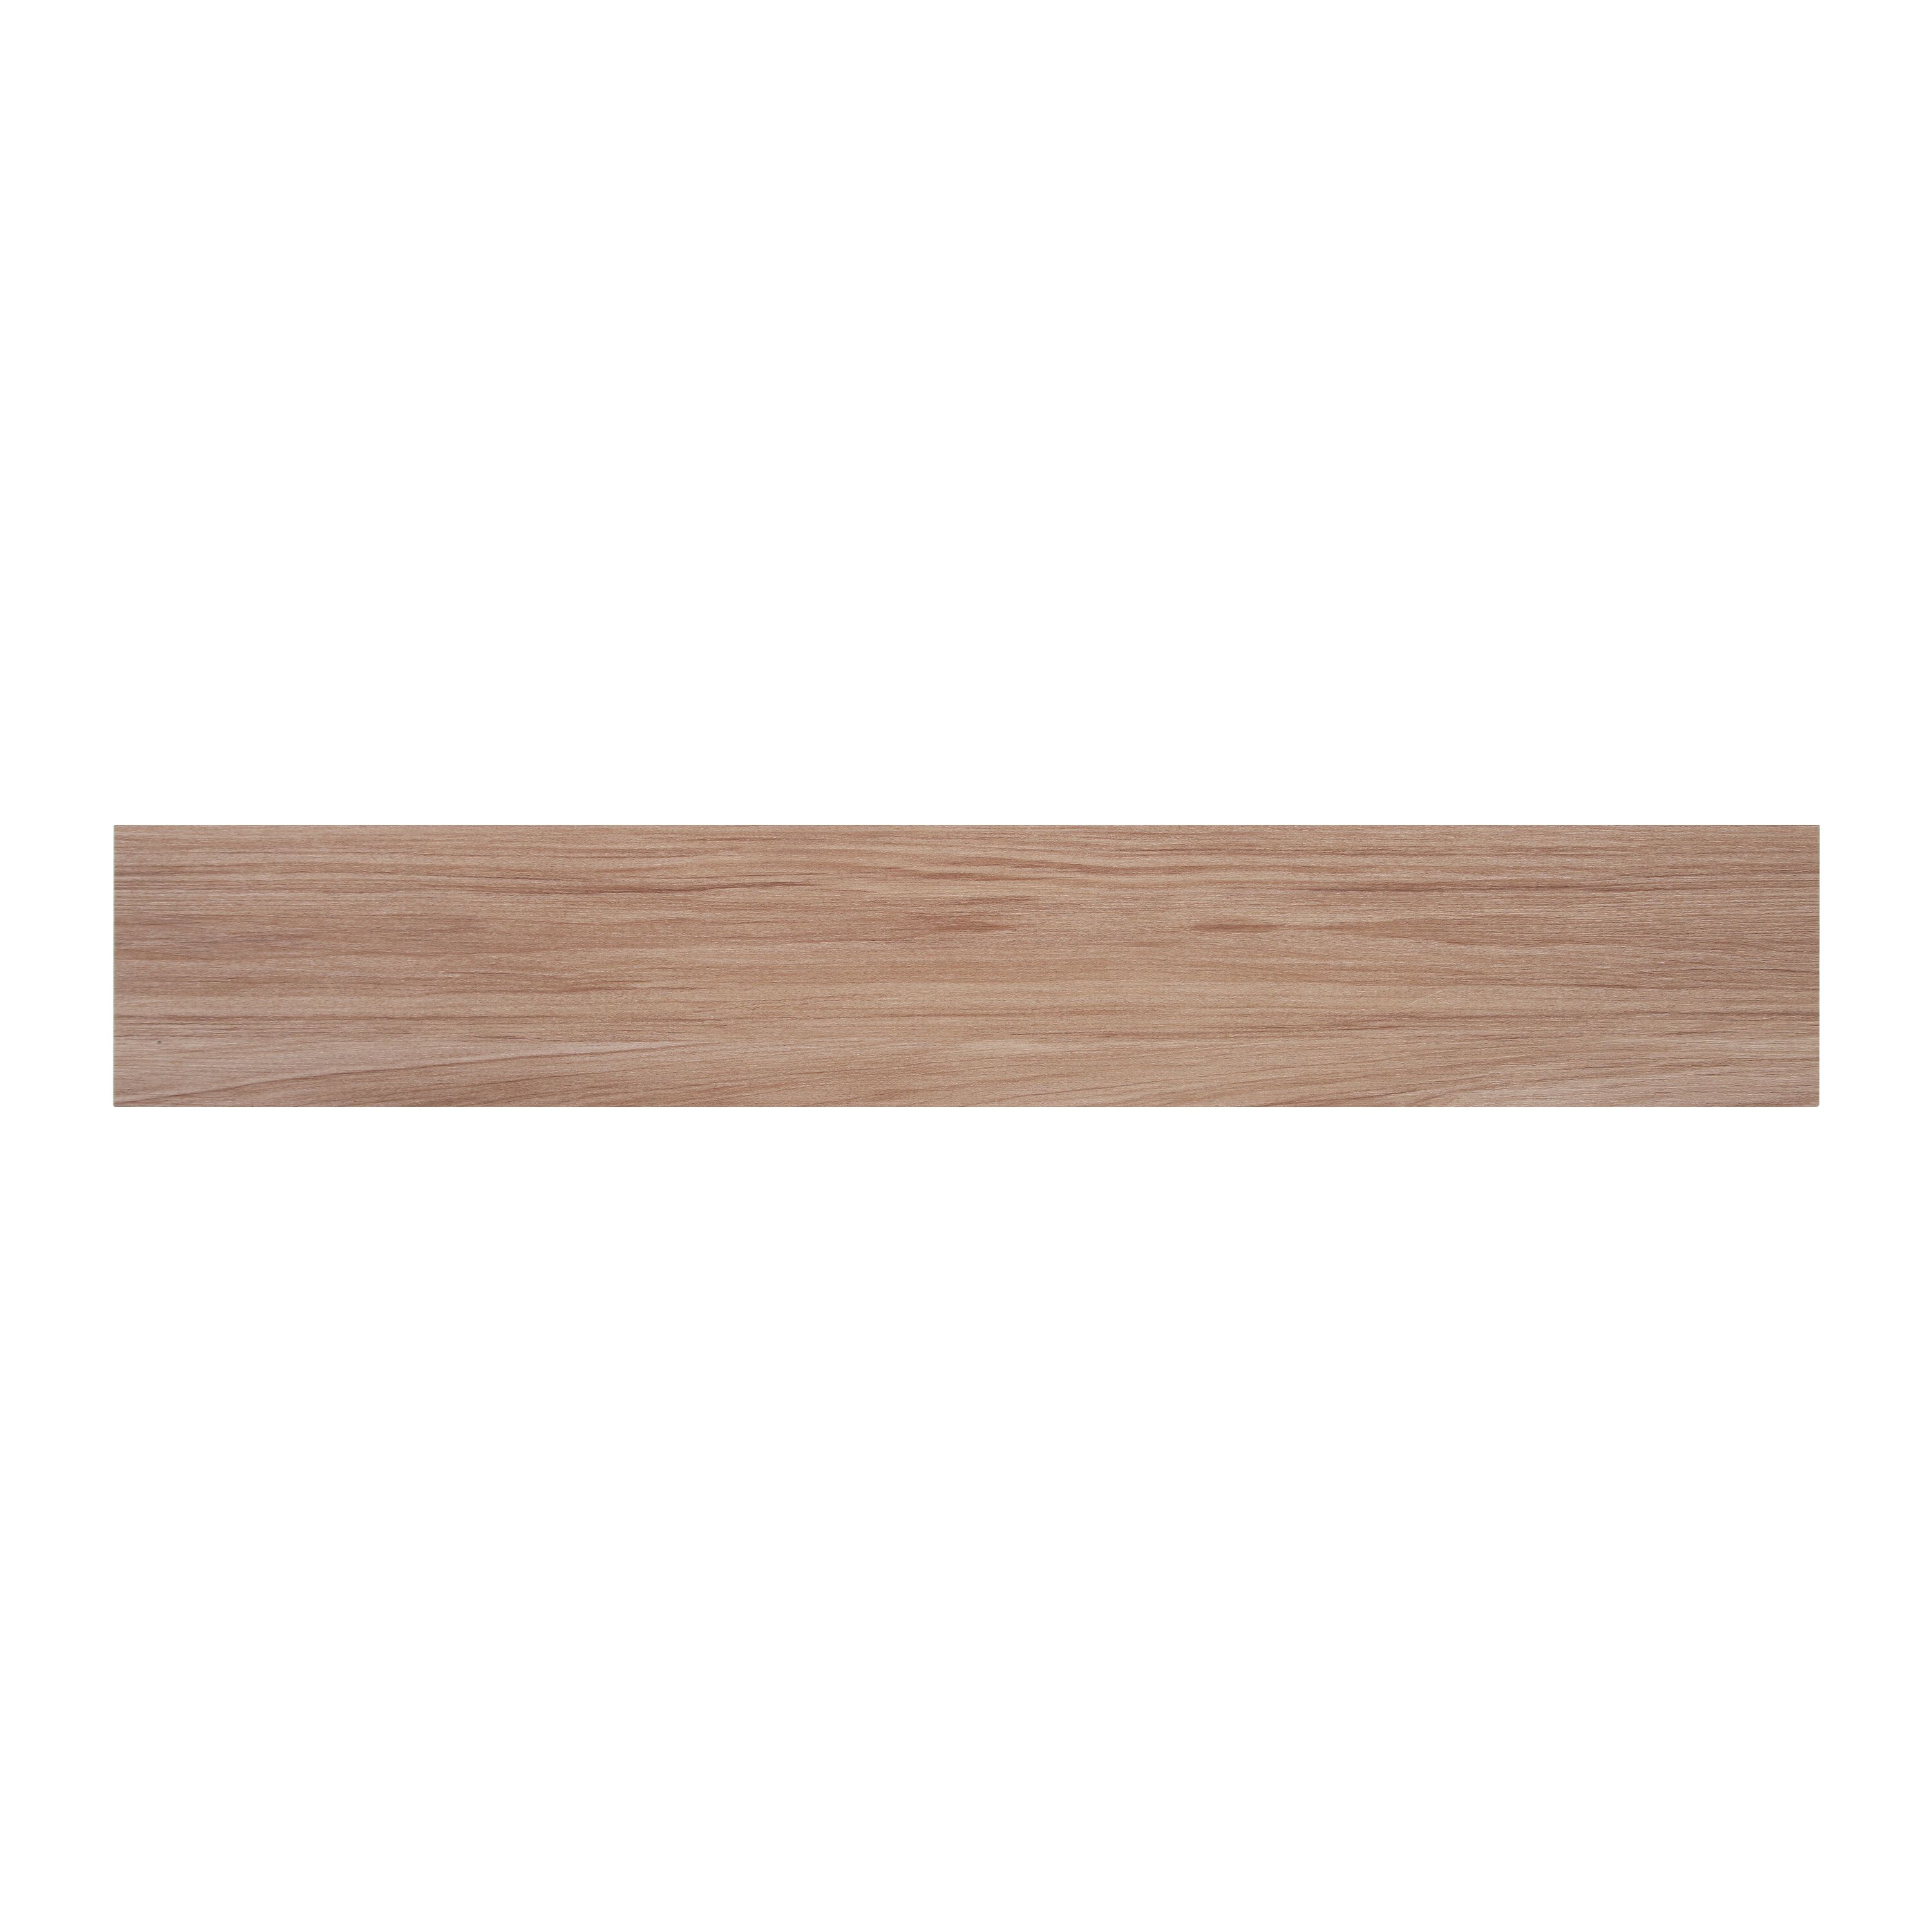 GoodHome Poprock Maple Wood effect Self-adhesive Vinyl plank, Pack of 8